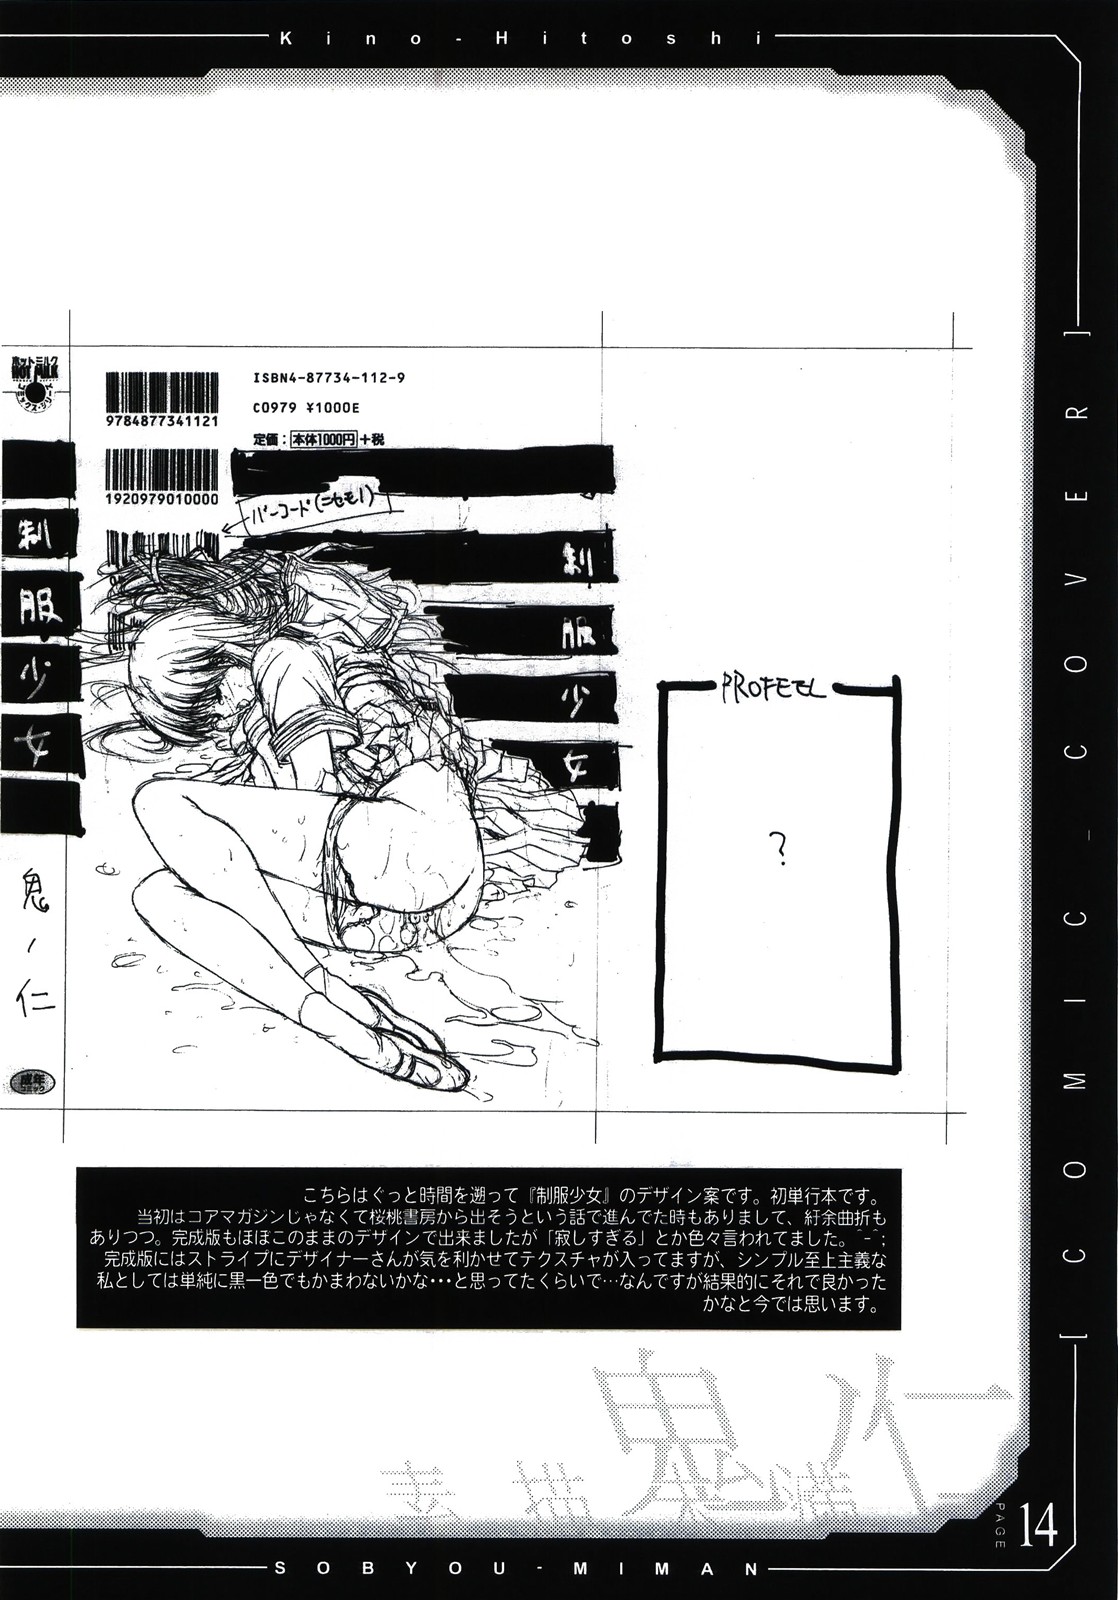 (CR34) [Kopikura (Kino Hitoshi)] pencil + rough (Original) (Cレヴォ34) [こぴくら (鬼ノ仁)] pencil + rough (オリジナル)